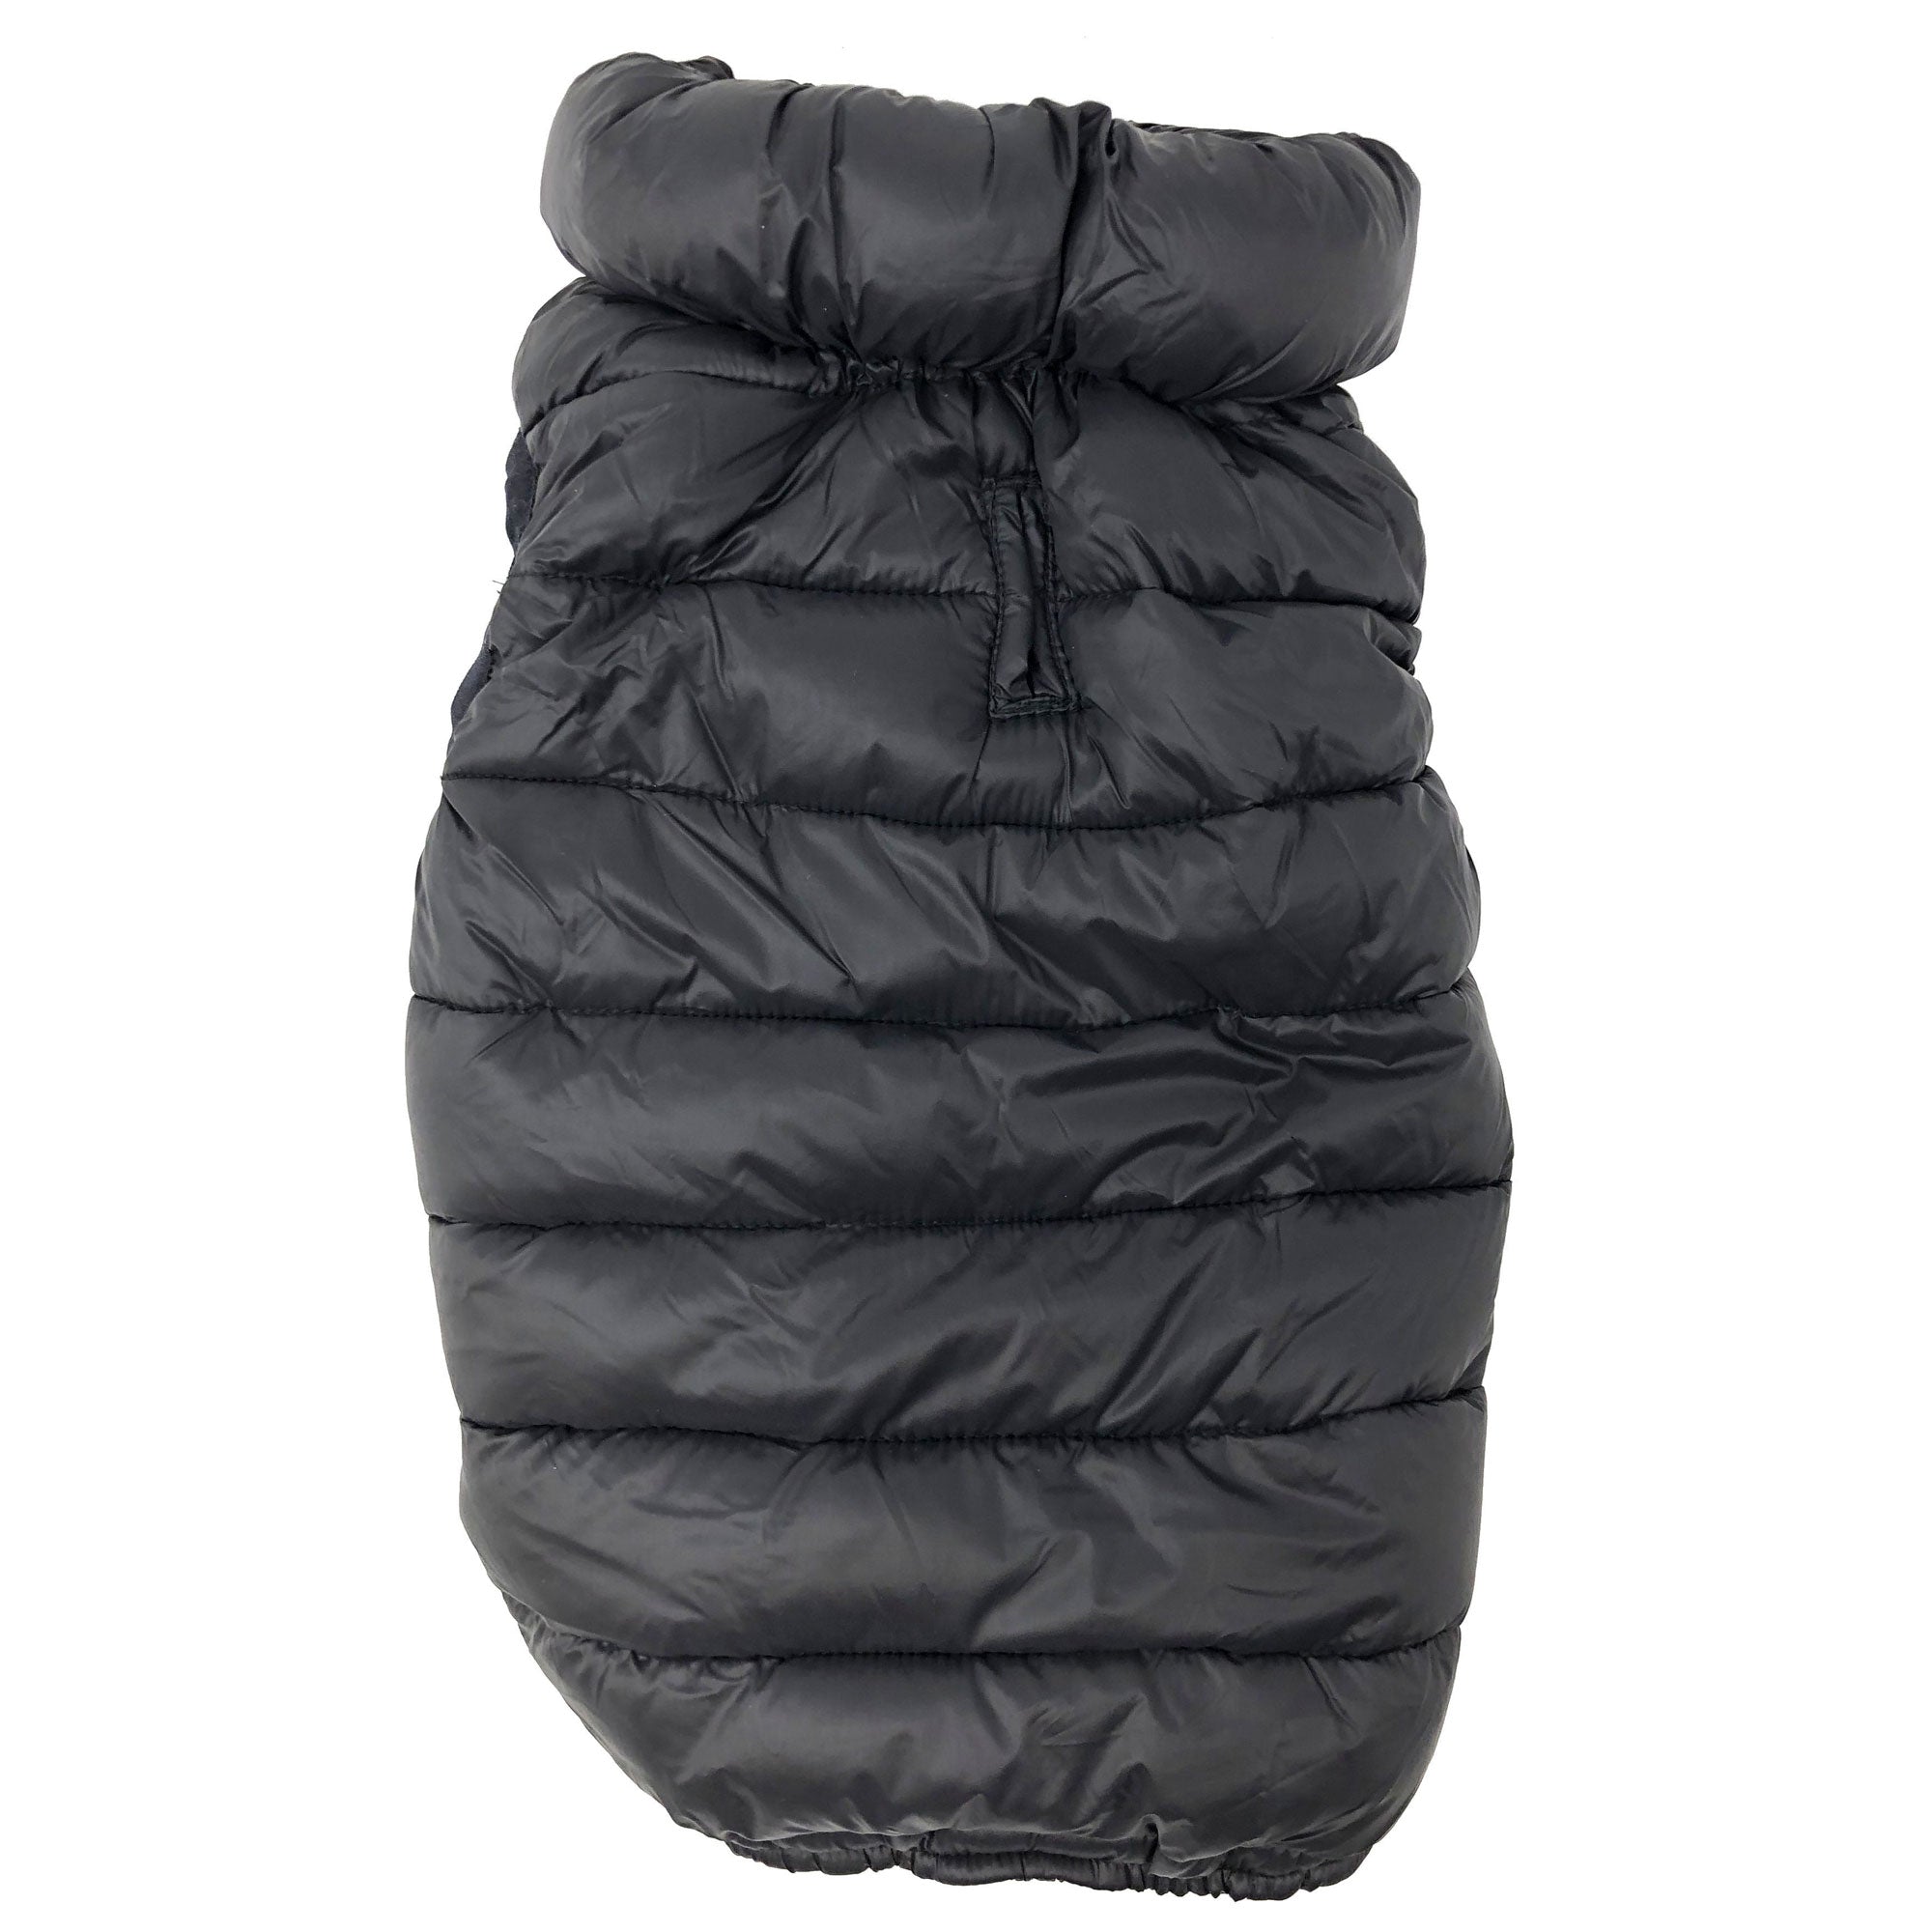 Pet Life® Black Pursuit Thermal Dog Jacket - Small